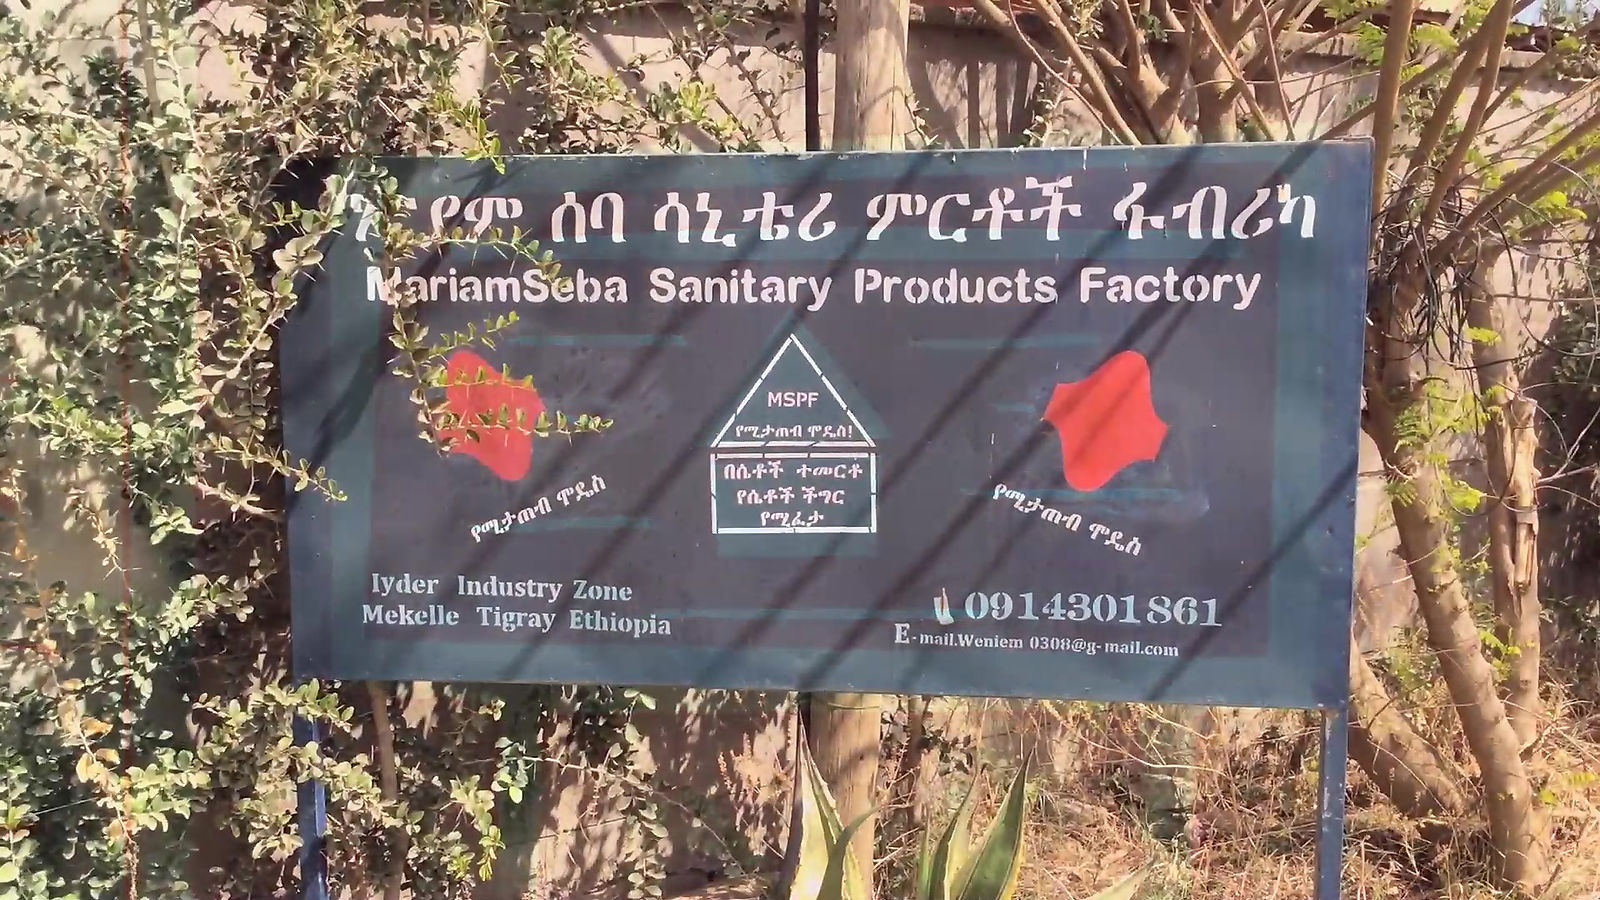 Mariam Seba Sanitary Products Factory